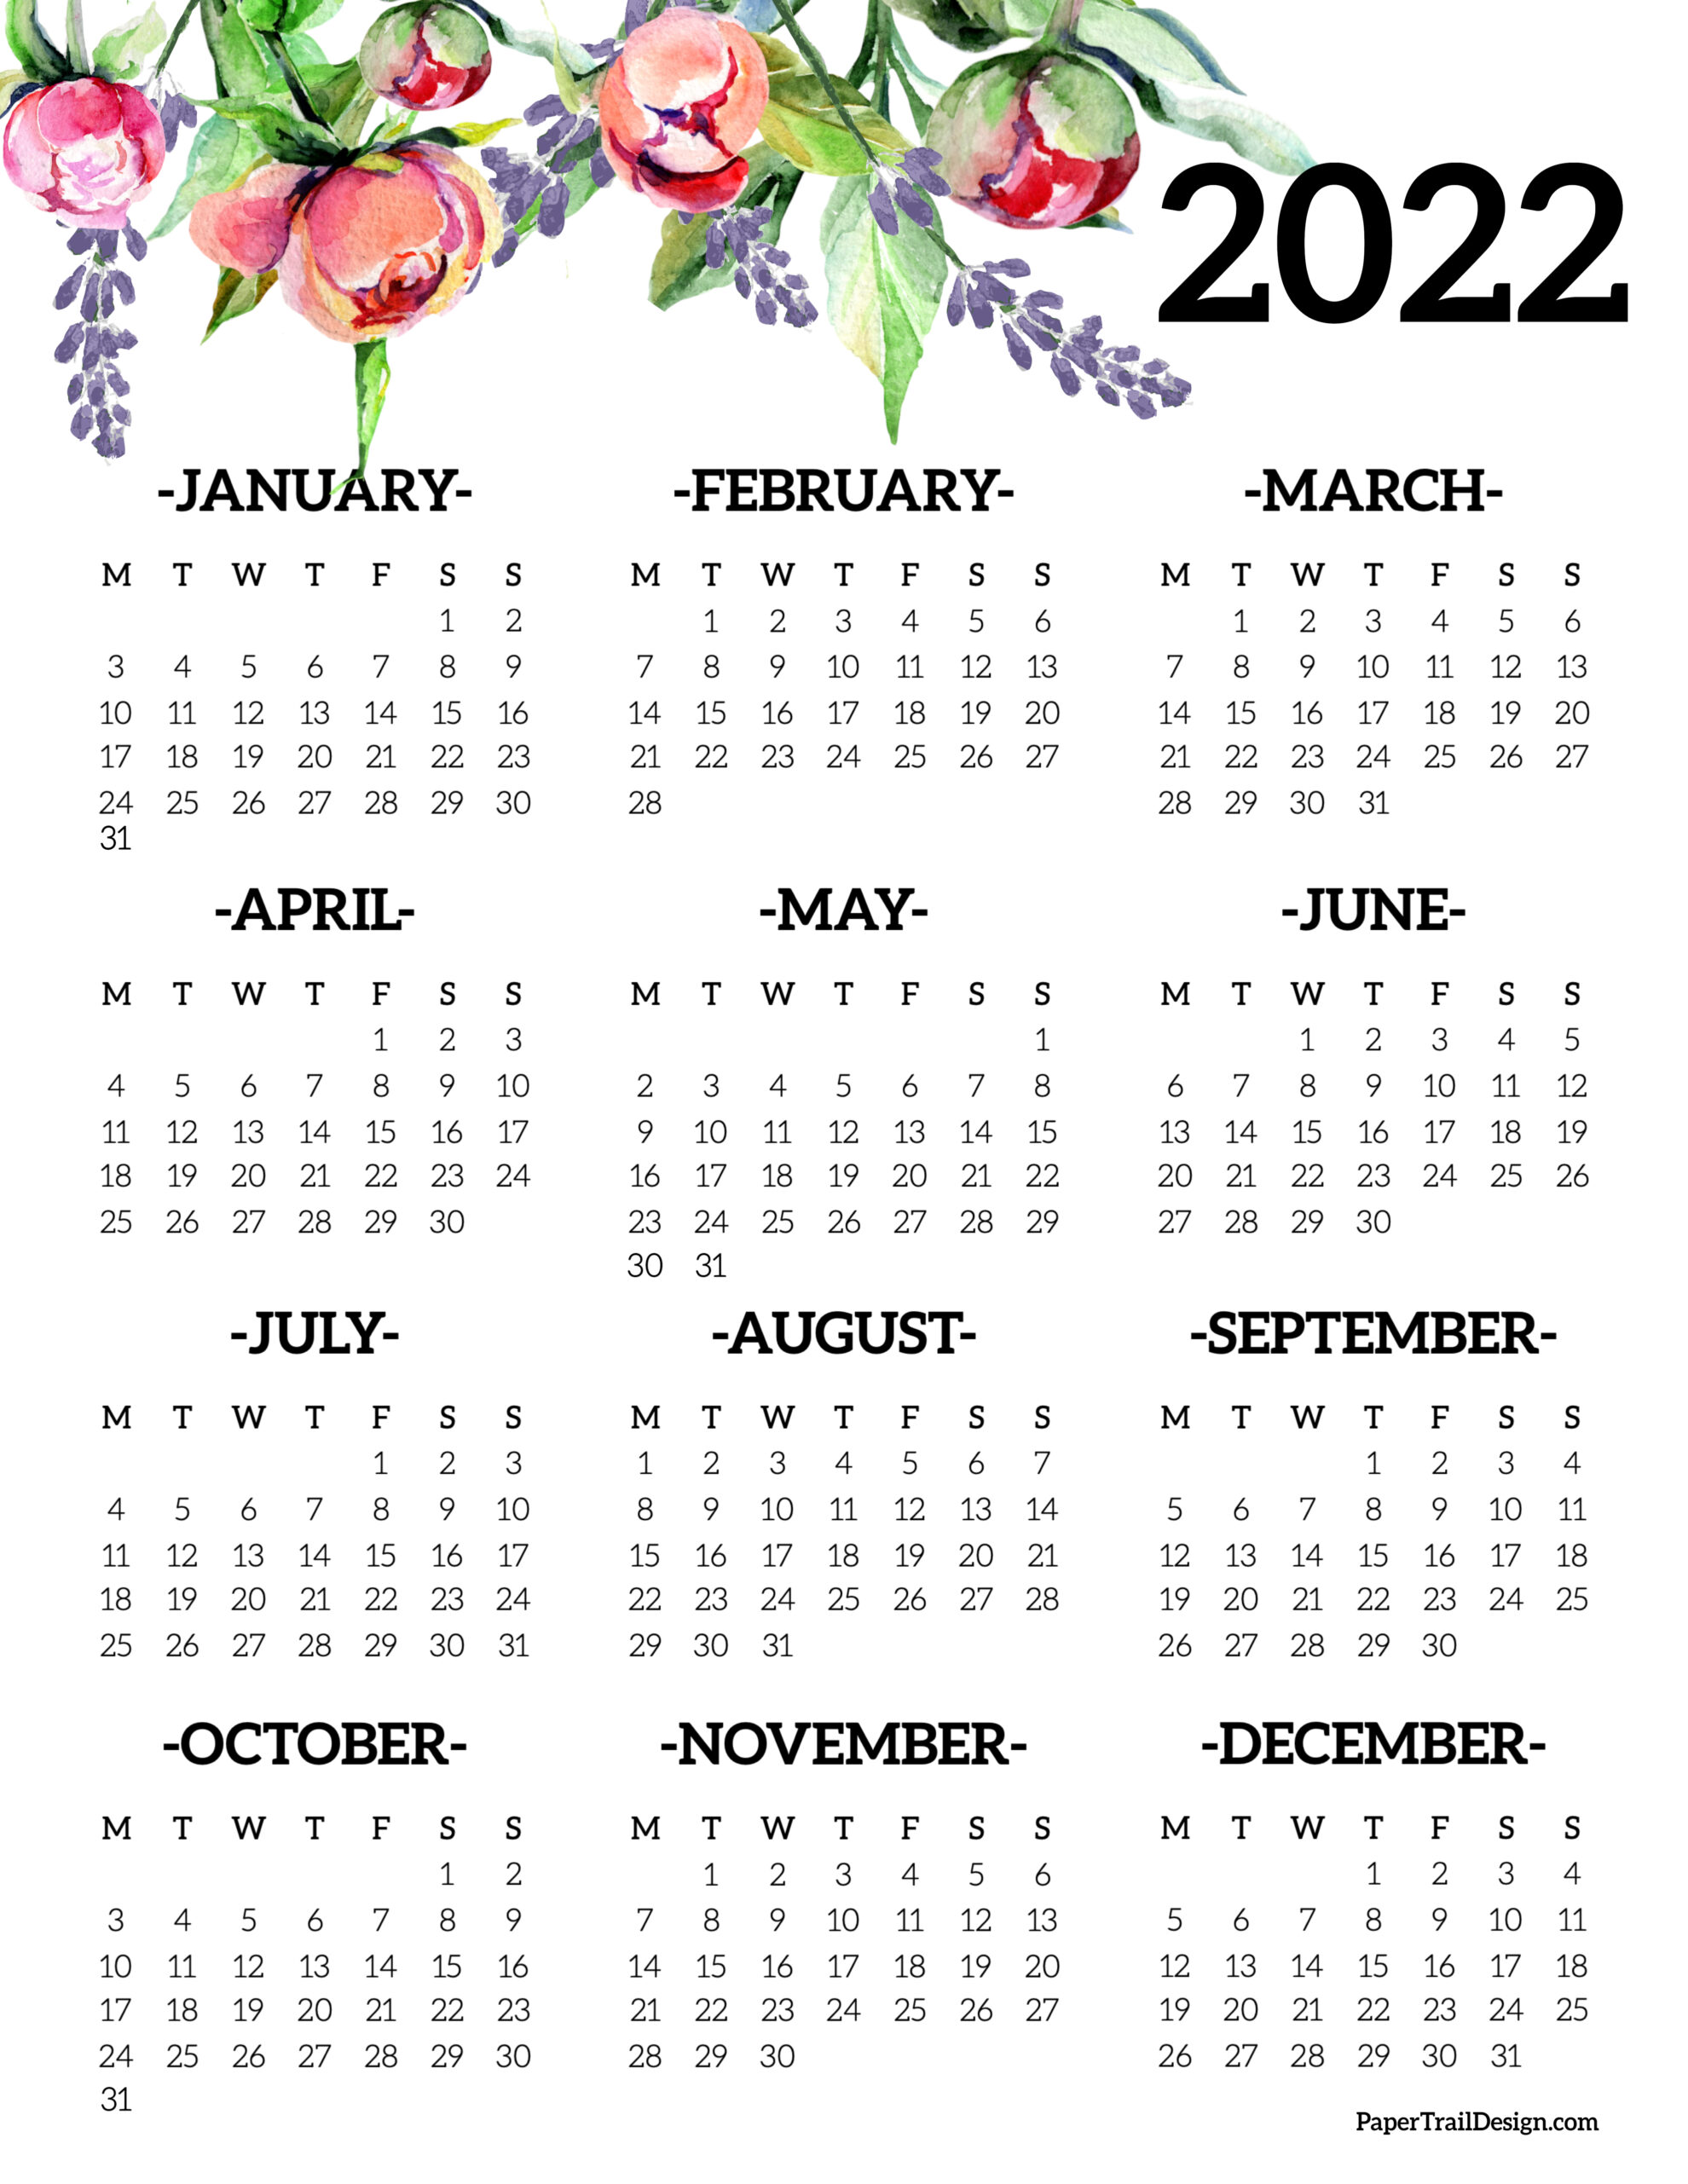 Monday Start Calendar 2022 2022 Monday Start Calendar- One Page - Paper Trail Design